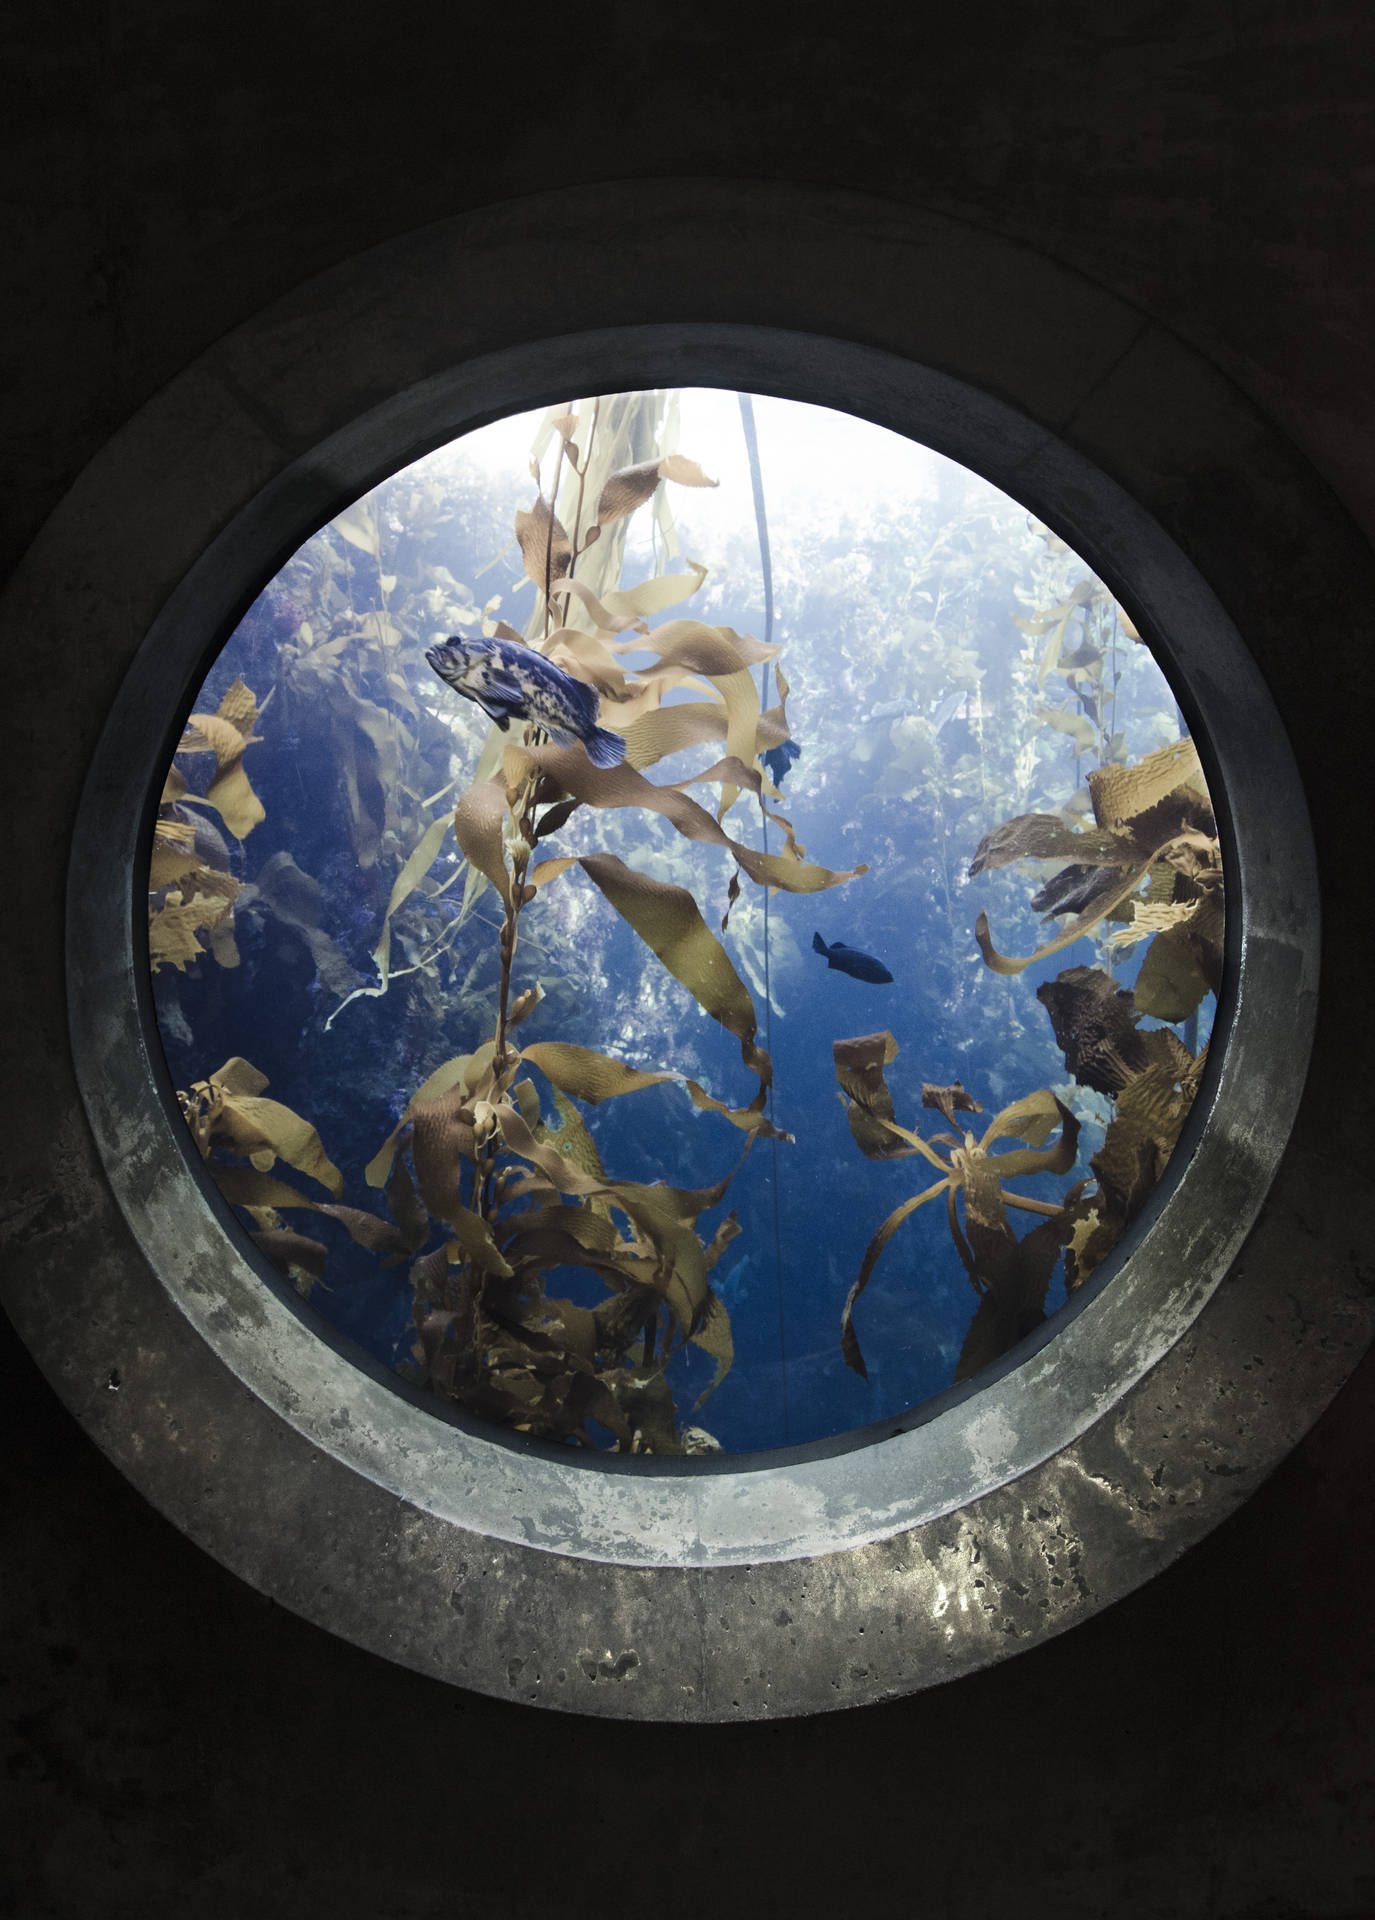 Aquariumfönster Topp Iphone. Wallpaper